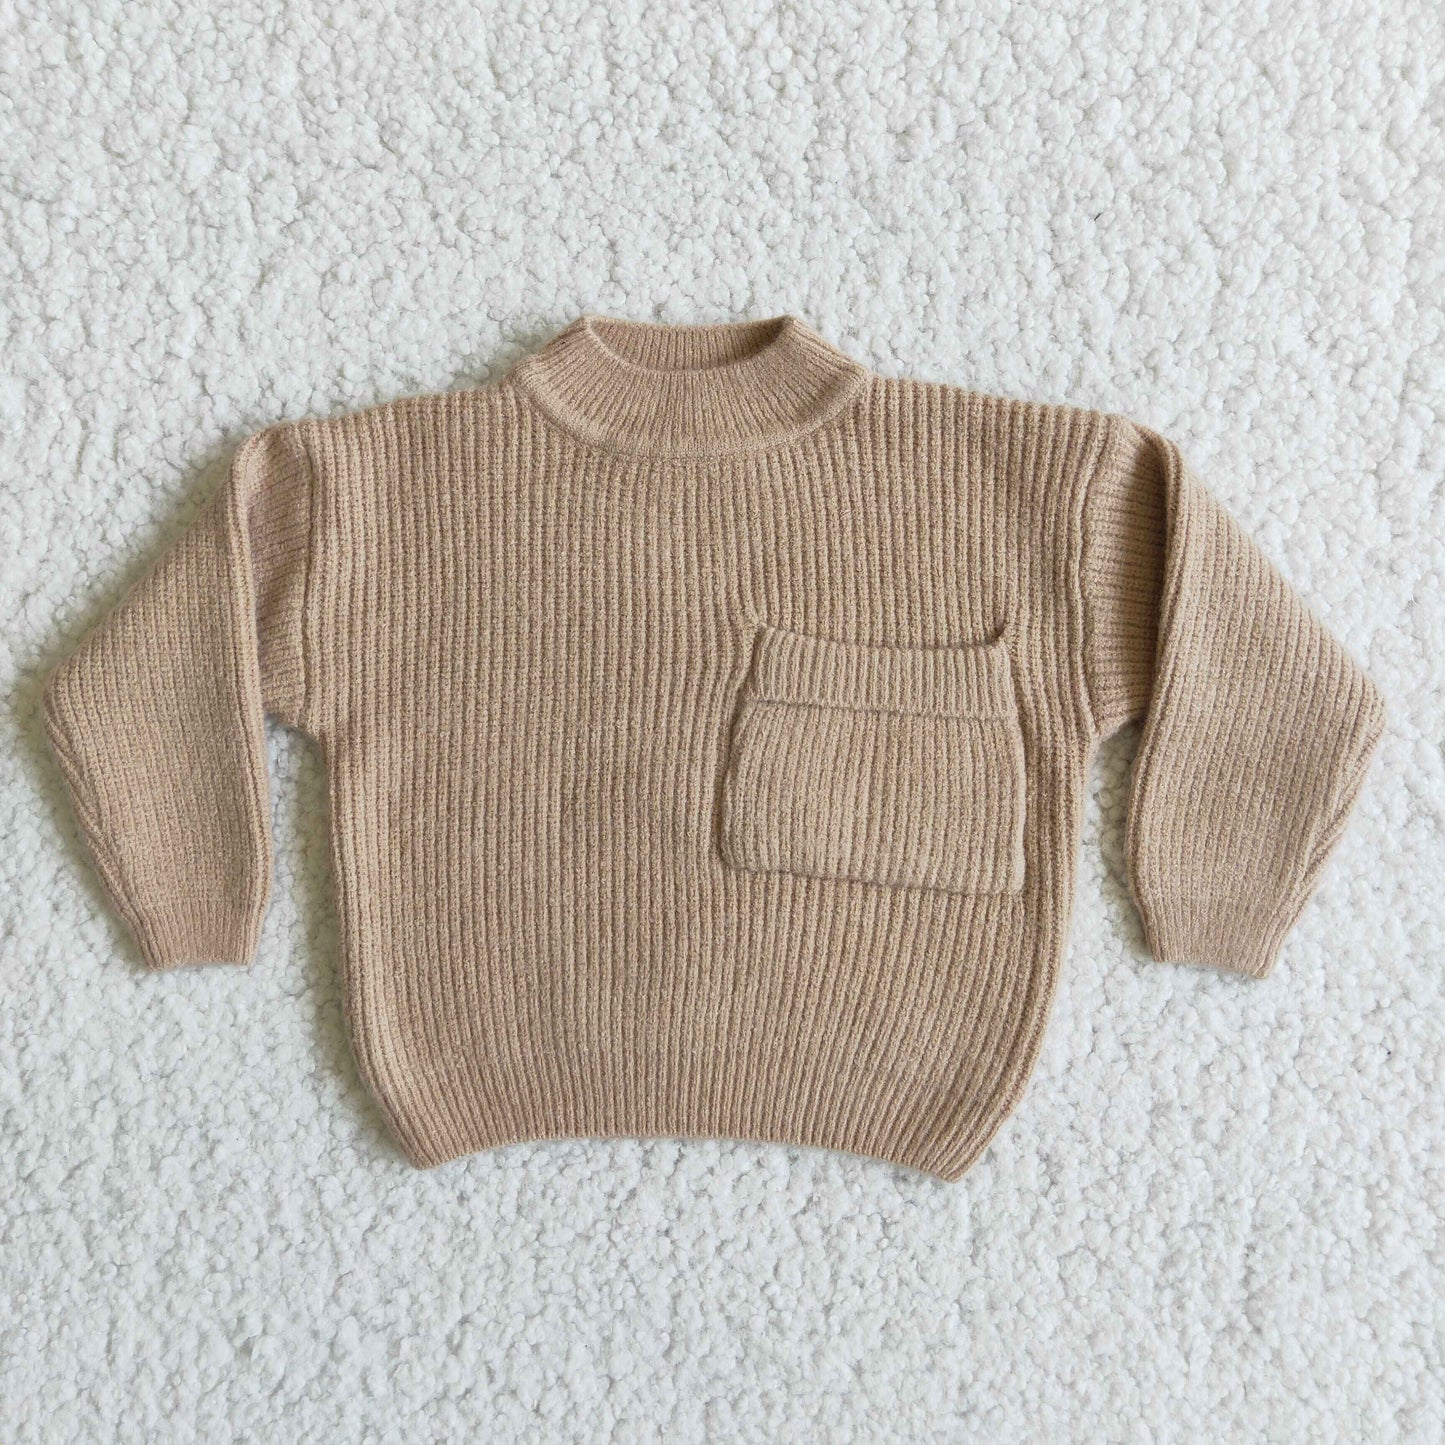 Khaki color pocket sweater